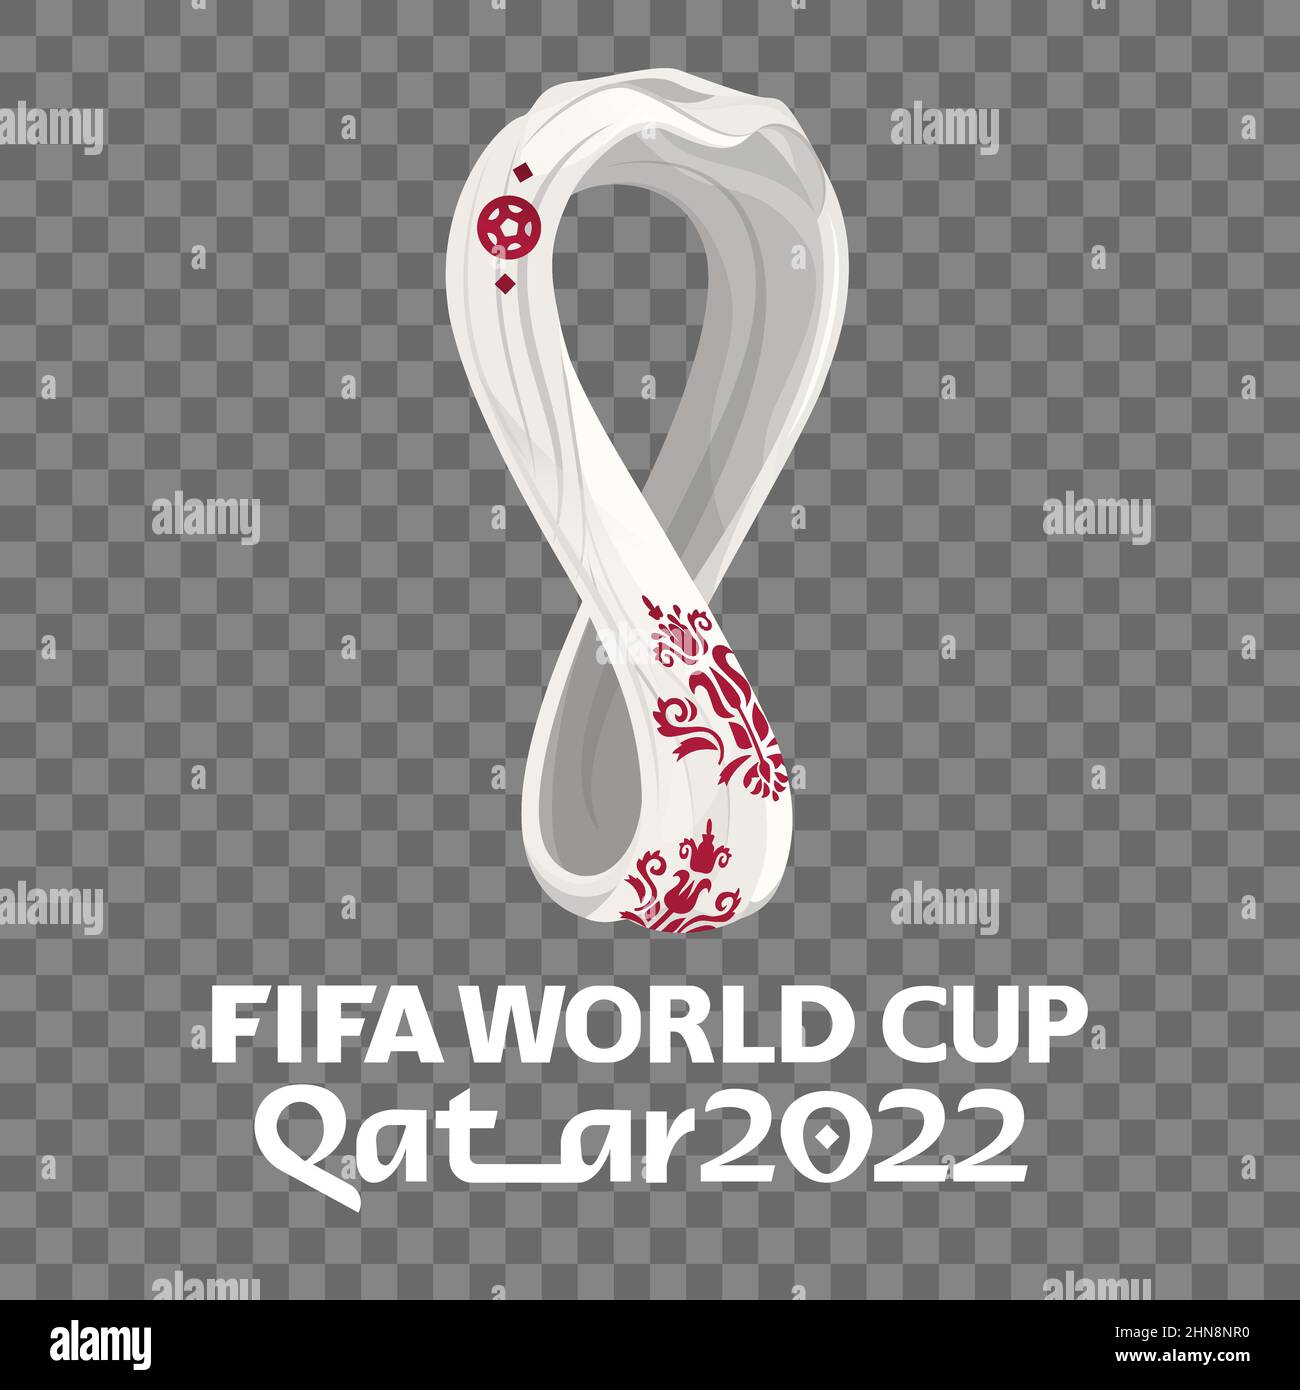 Vinnytsia, Ukraine - February 14, 2022: 2022 FIFA world cup logo ...